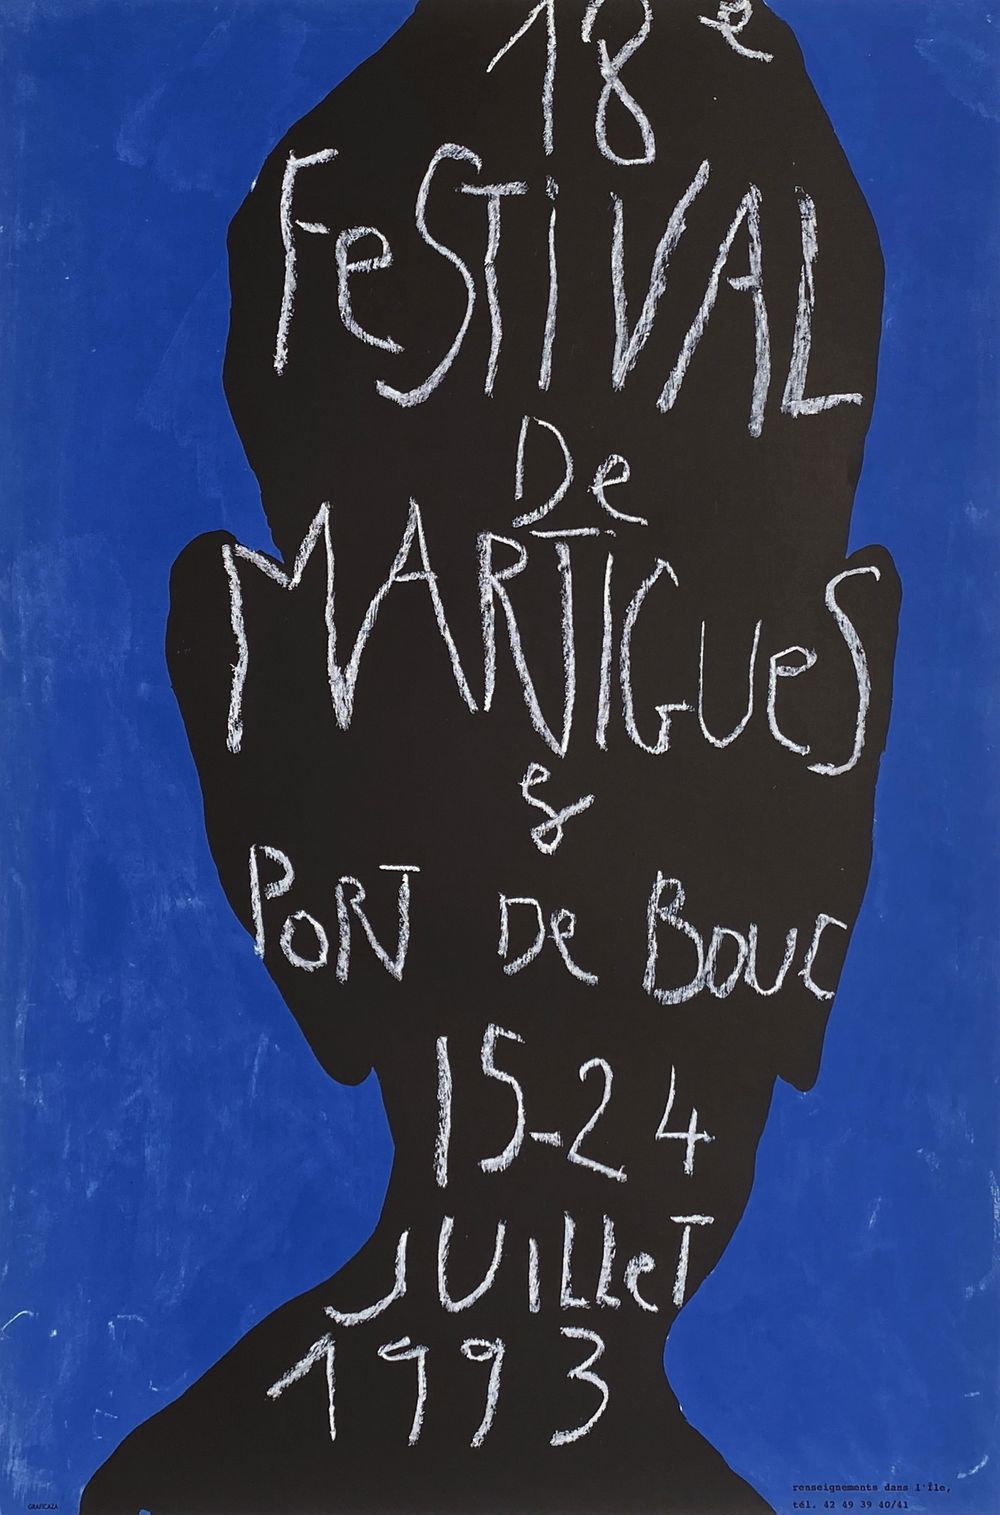 Festival de Martigues